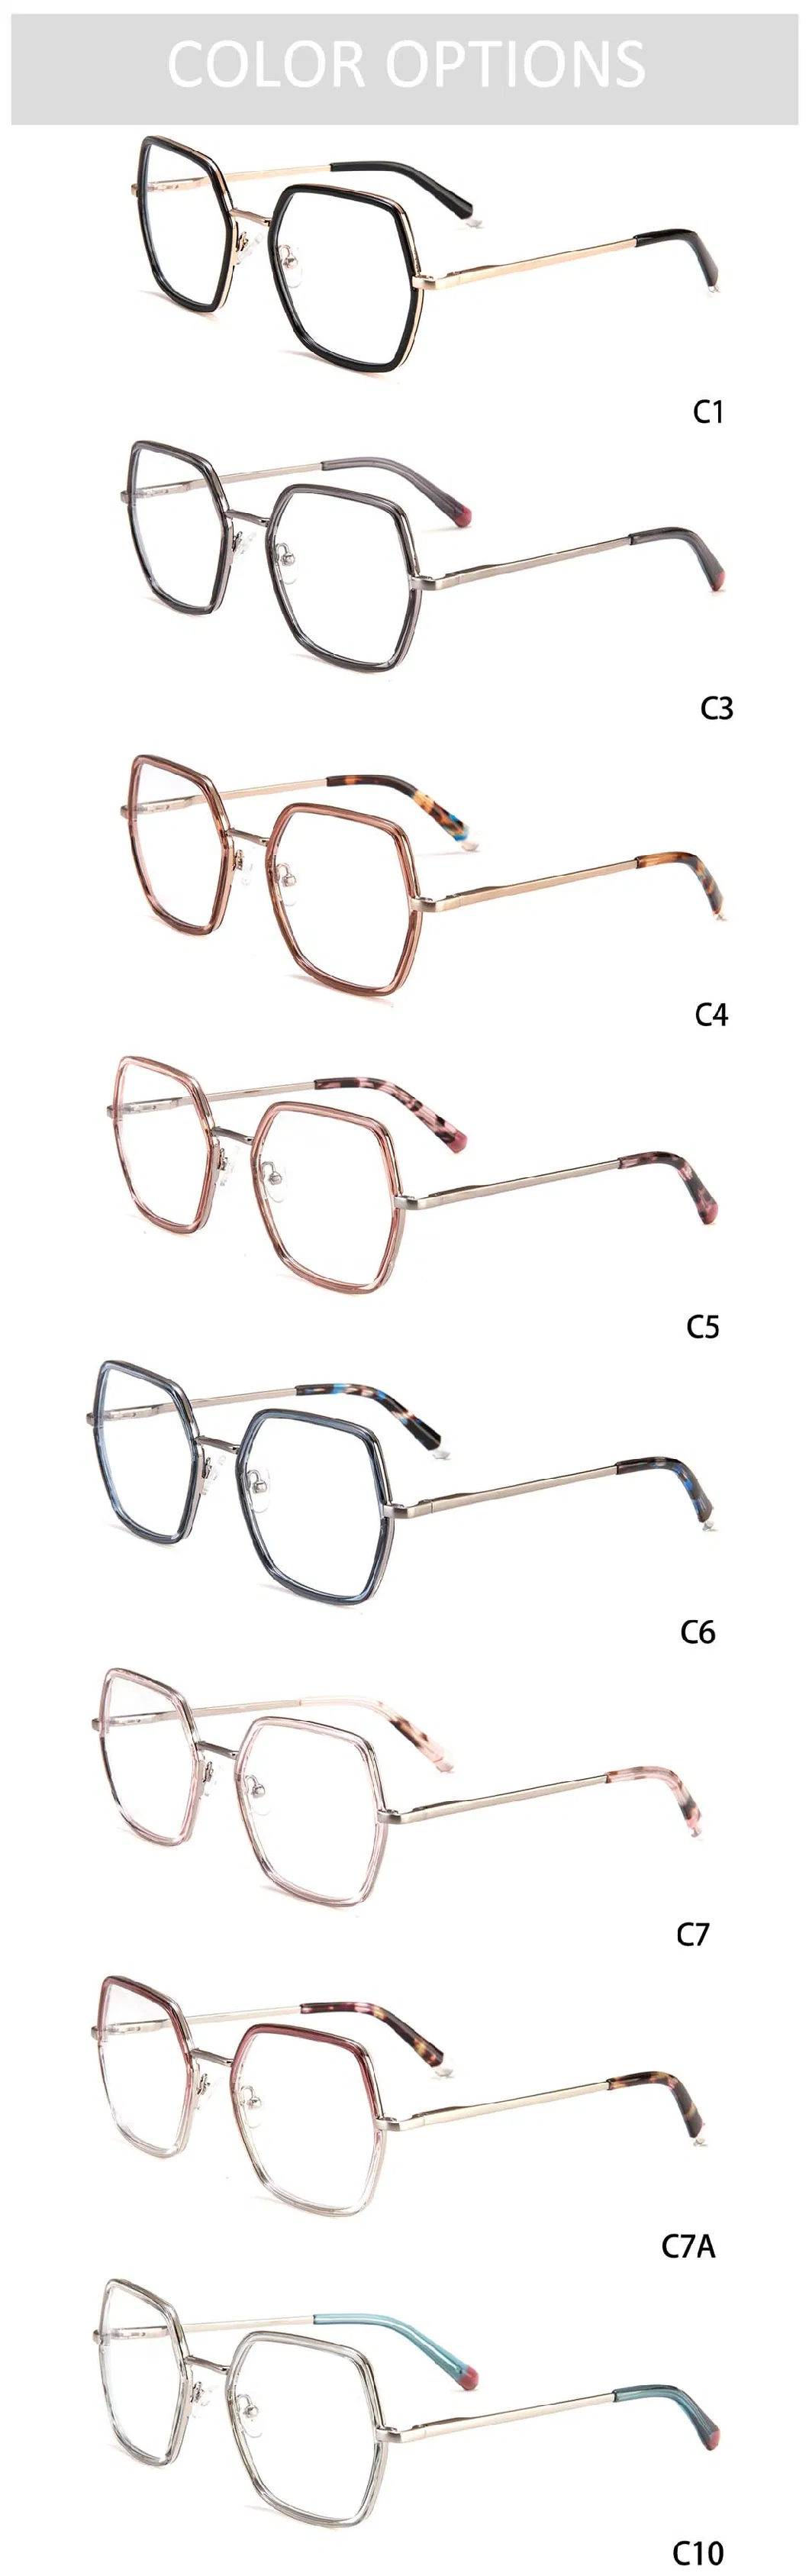 Gd New Trend Glasses Frame Metal Women Eyewear Optical Beautiful Glasses Frames